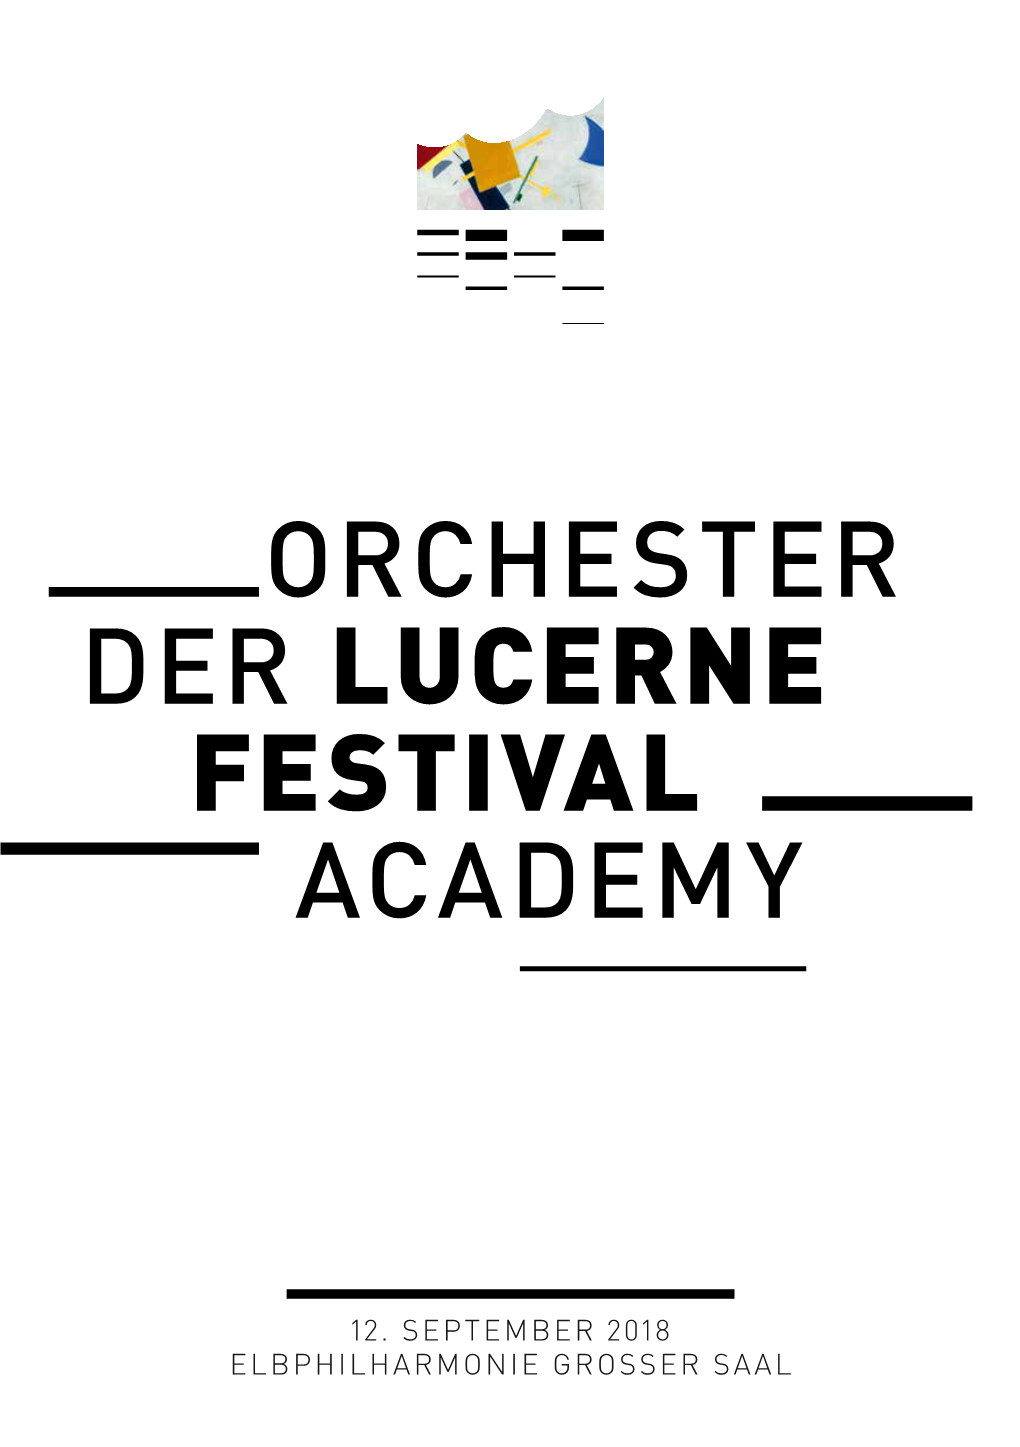 Der Lucerne Festival Academy